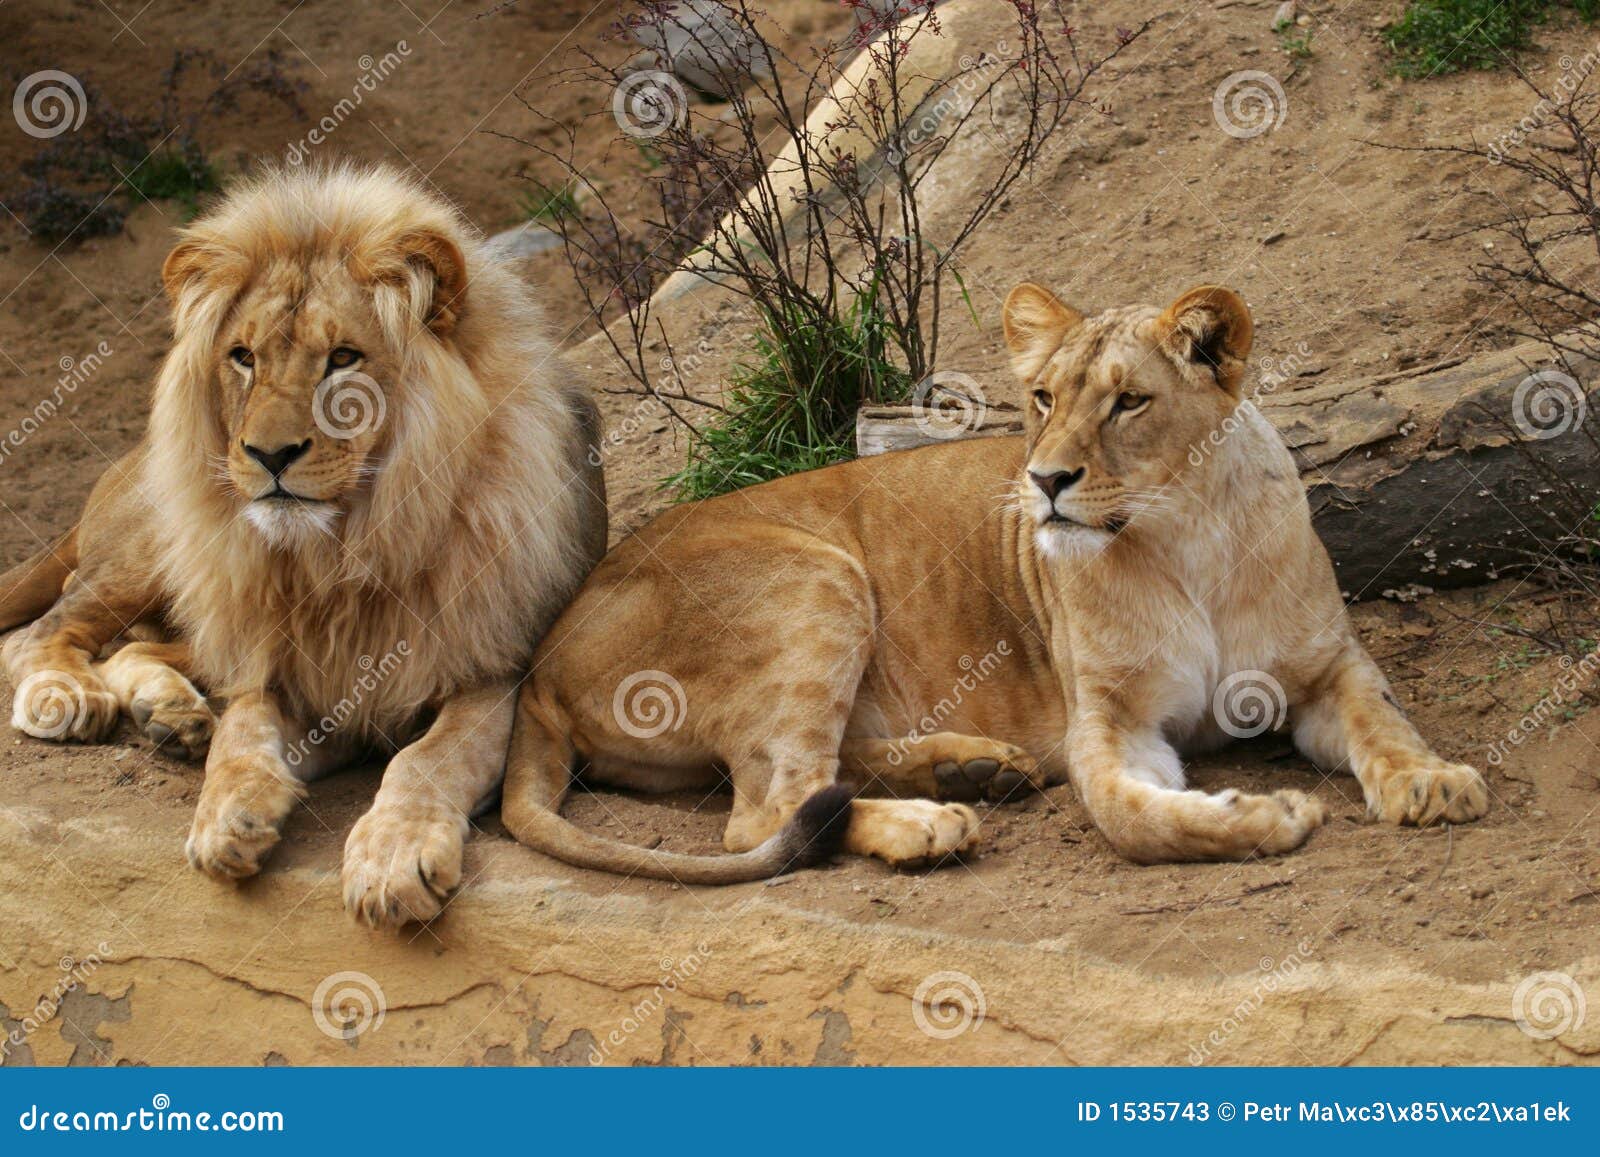 angola lion, lion and lioness